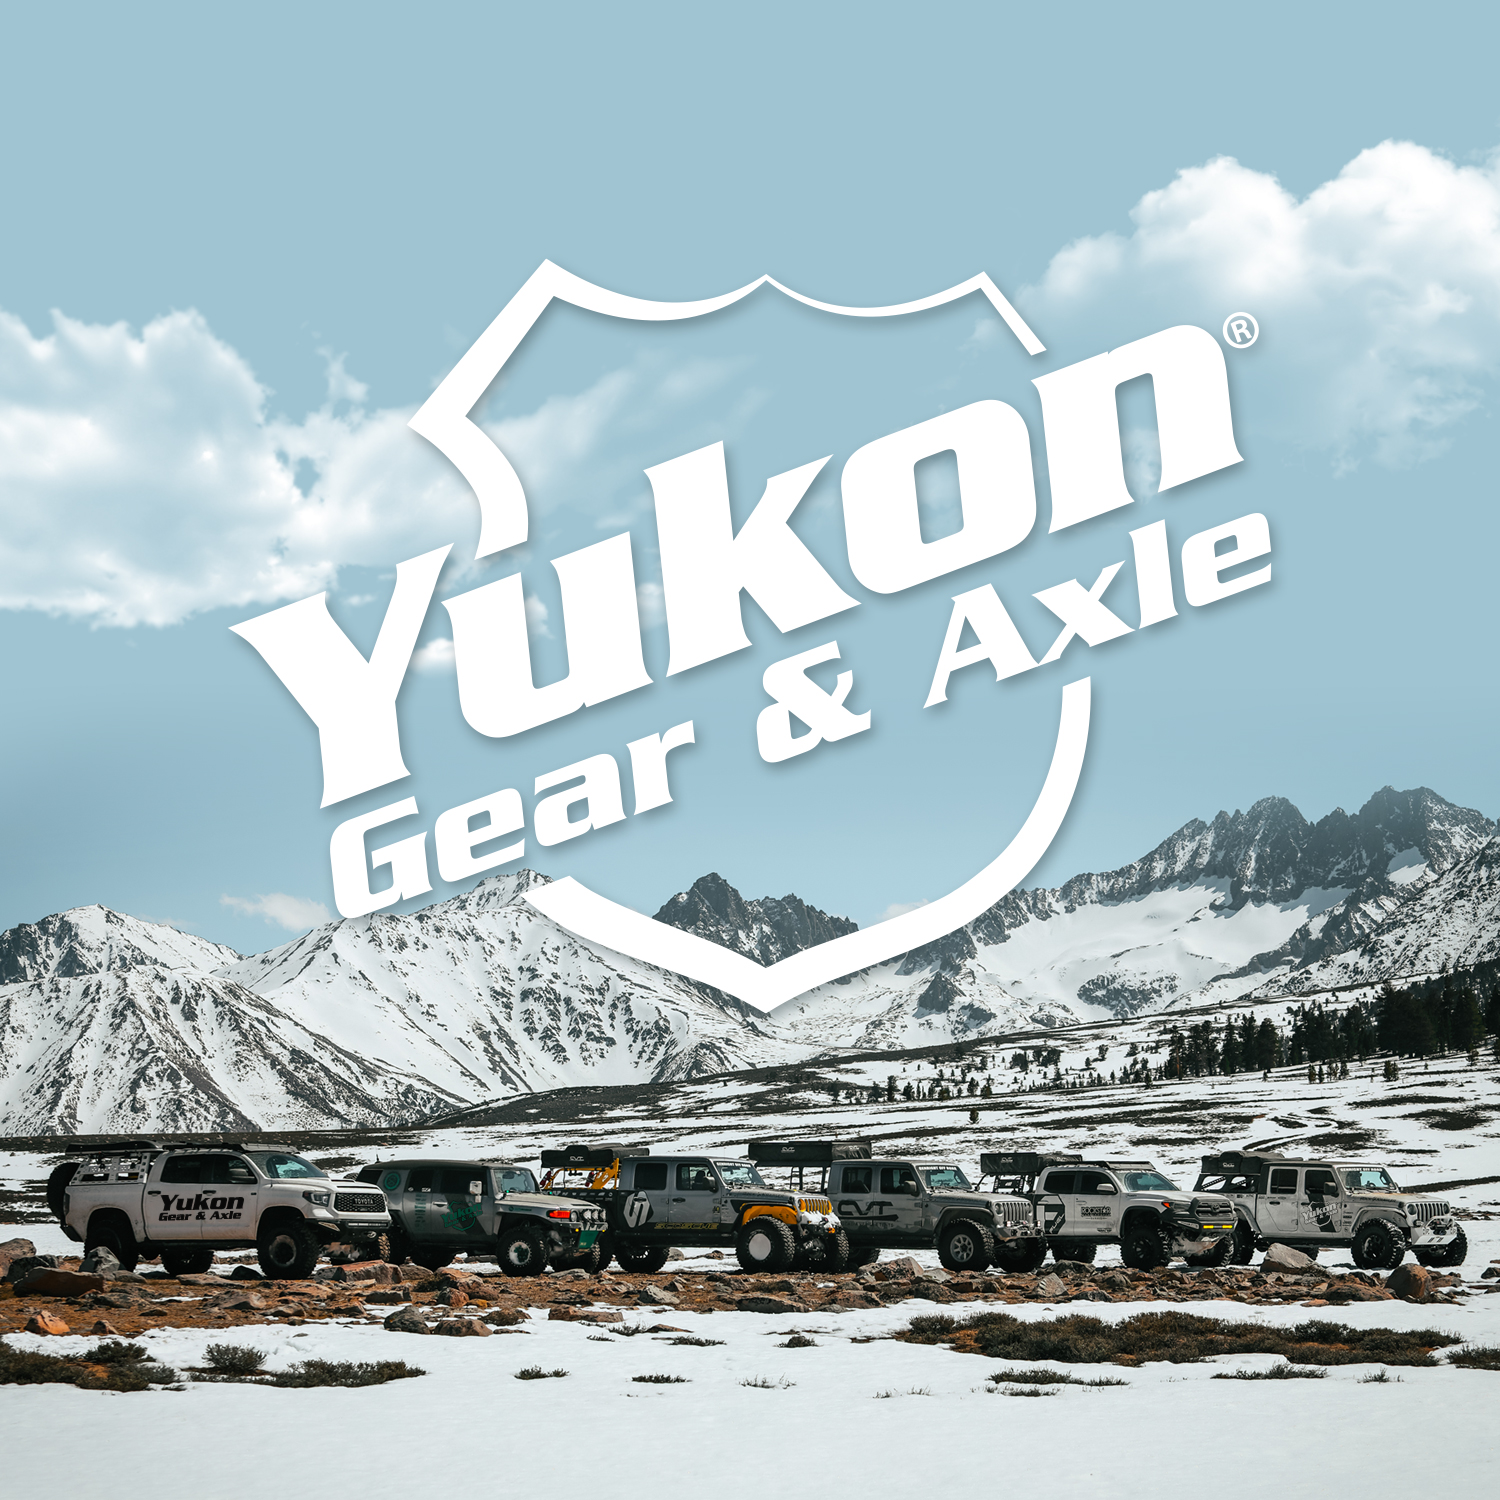 Yukon high performance replacement ring & pinion gear set, Dana 60, 4.88 ratio 